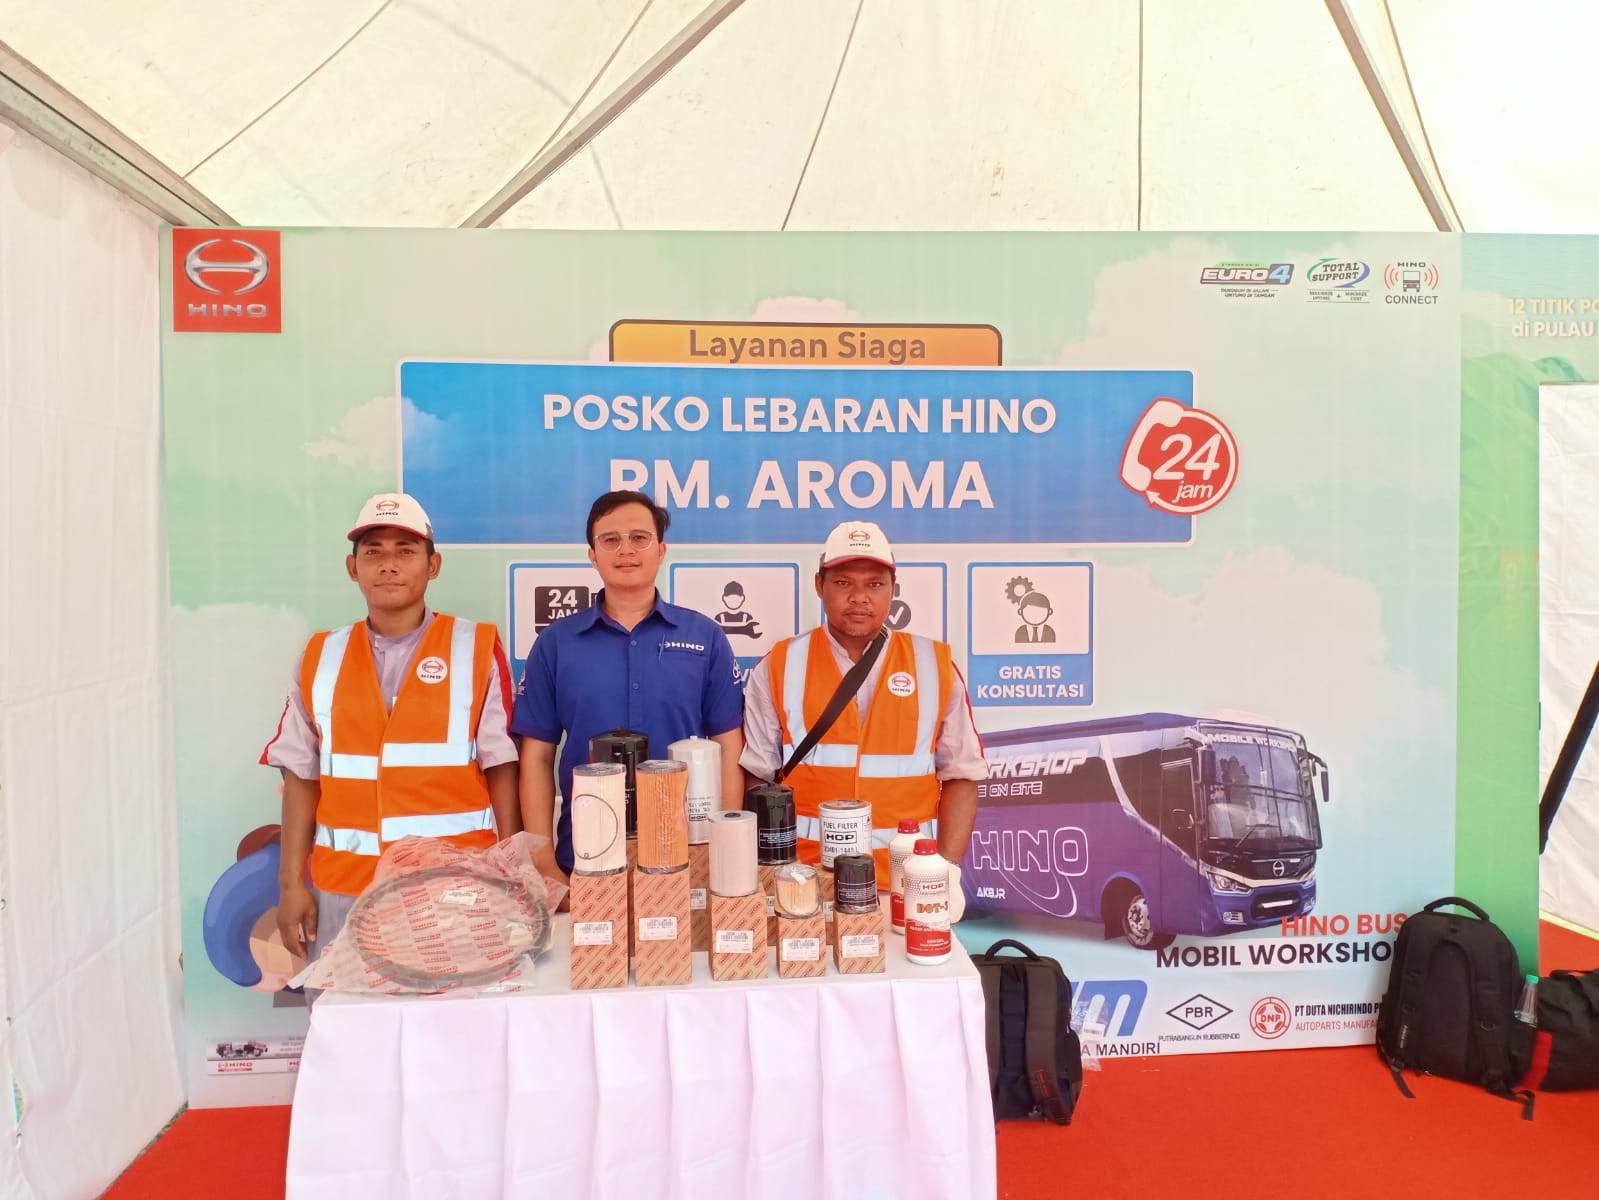 Posko Lebaran Hino di RM Aroma - Cirebon - apakabar.co.id